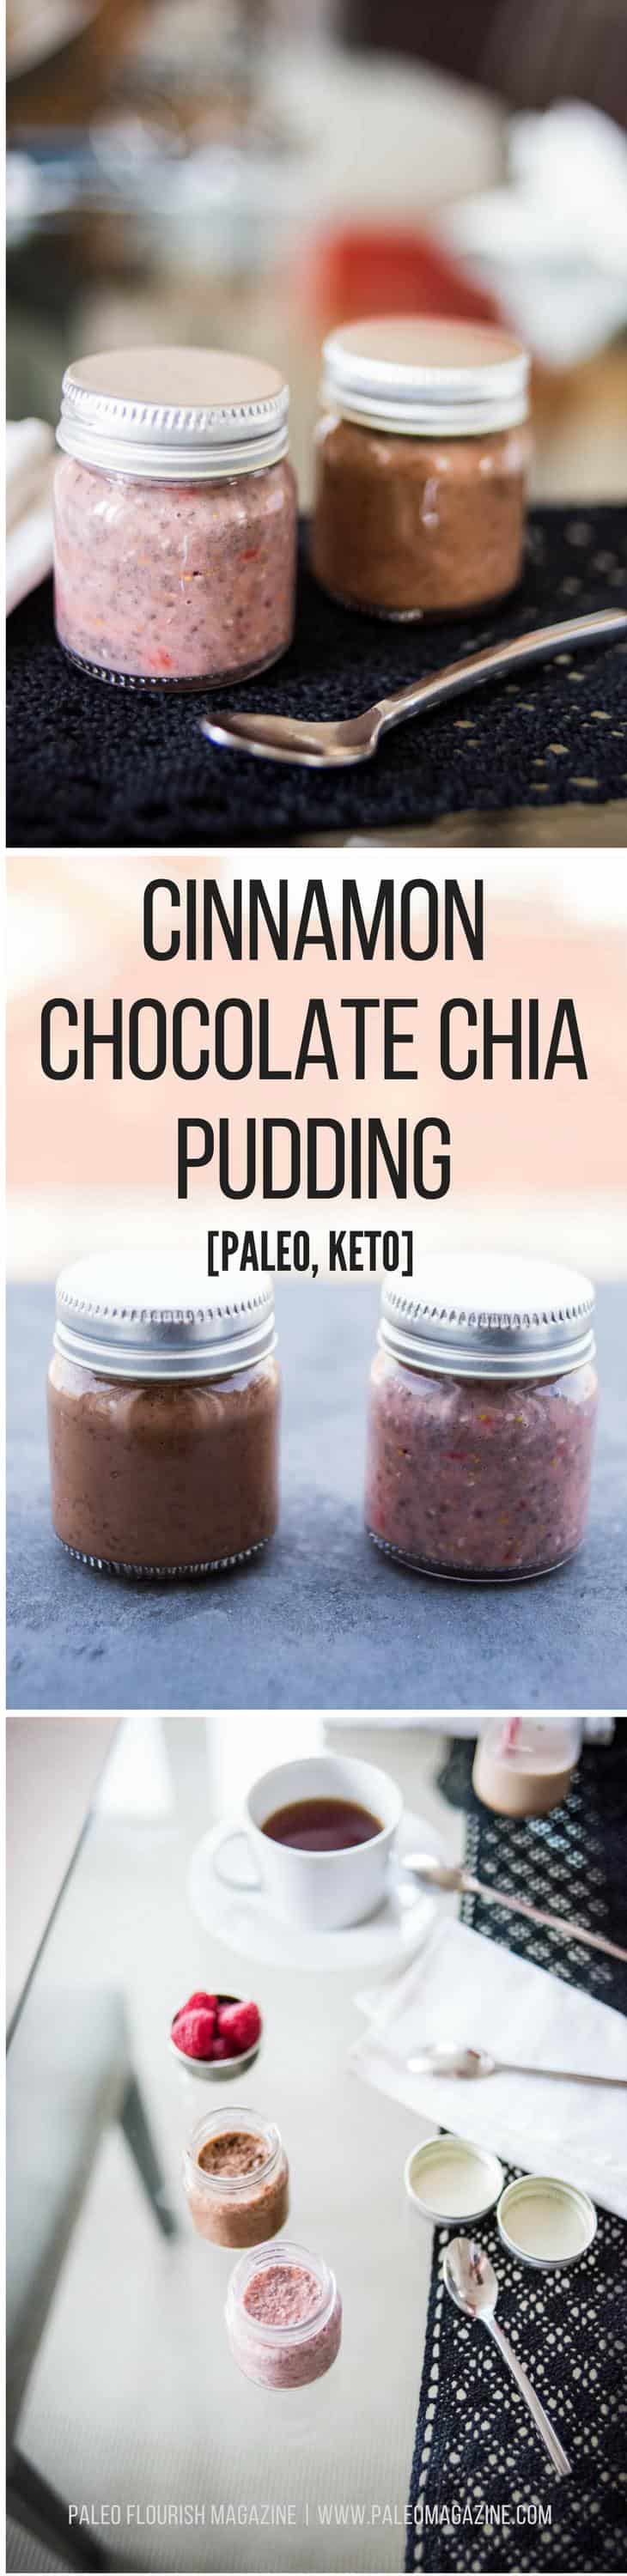 Cinnamon Chocolate Chia Pudding Recipe [Paleo, Keto] #paleo #keto - https://ketosummit.com/cinnamon-chocolate-chia-pudding-paleo-keto